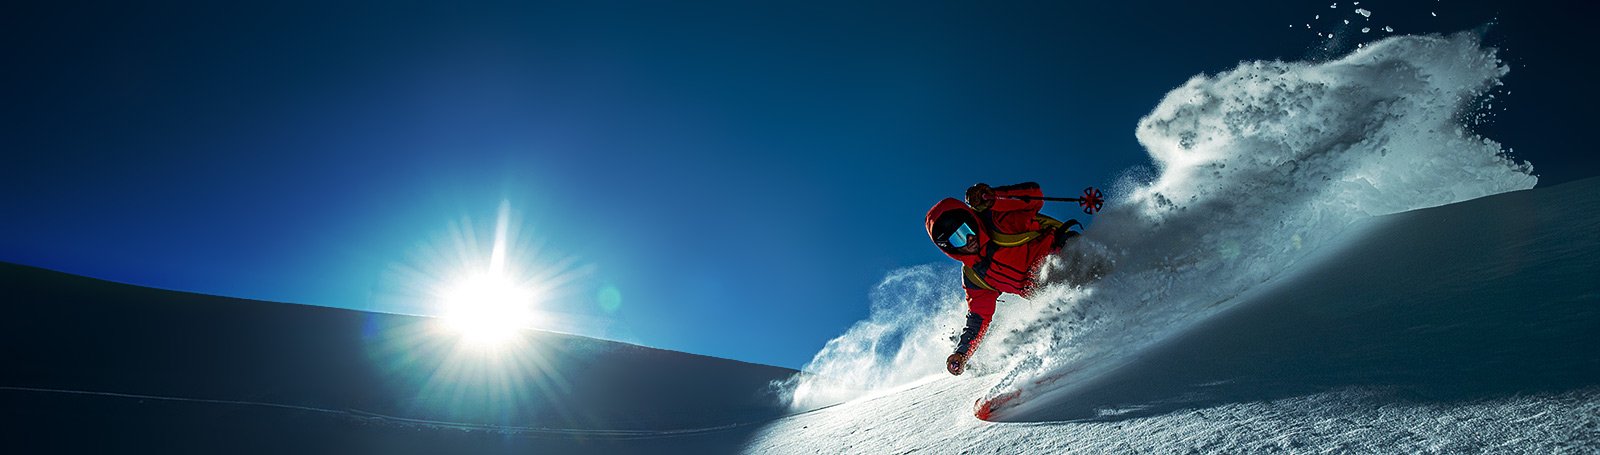 Zaino porta scarponi da sci/snowboard - Sports In vendita a Vicenza